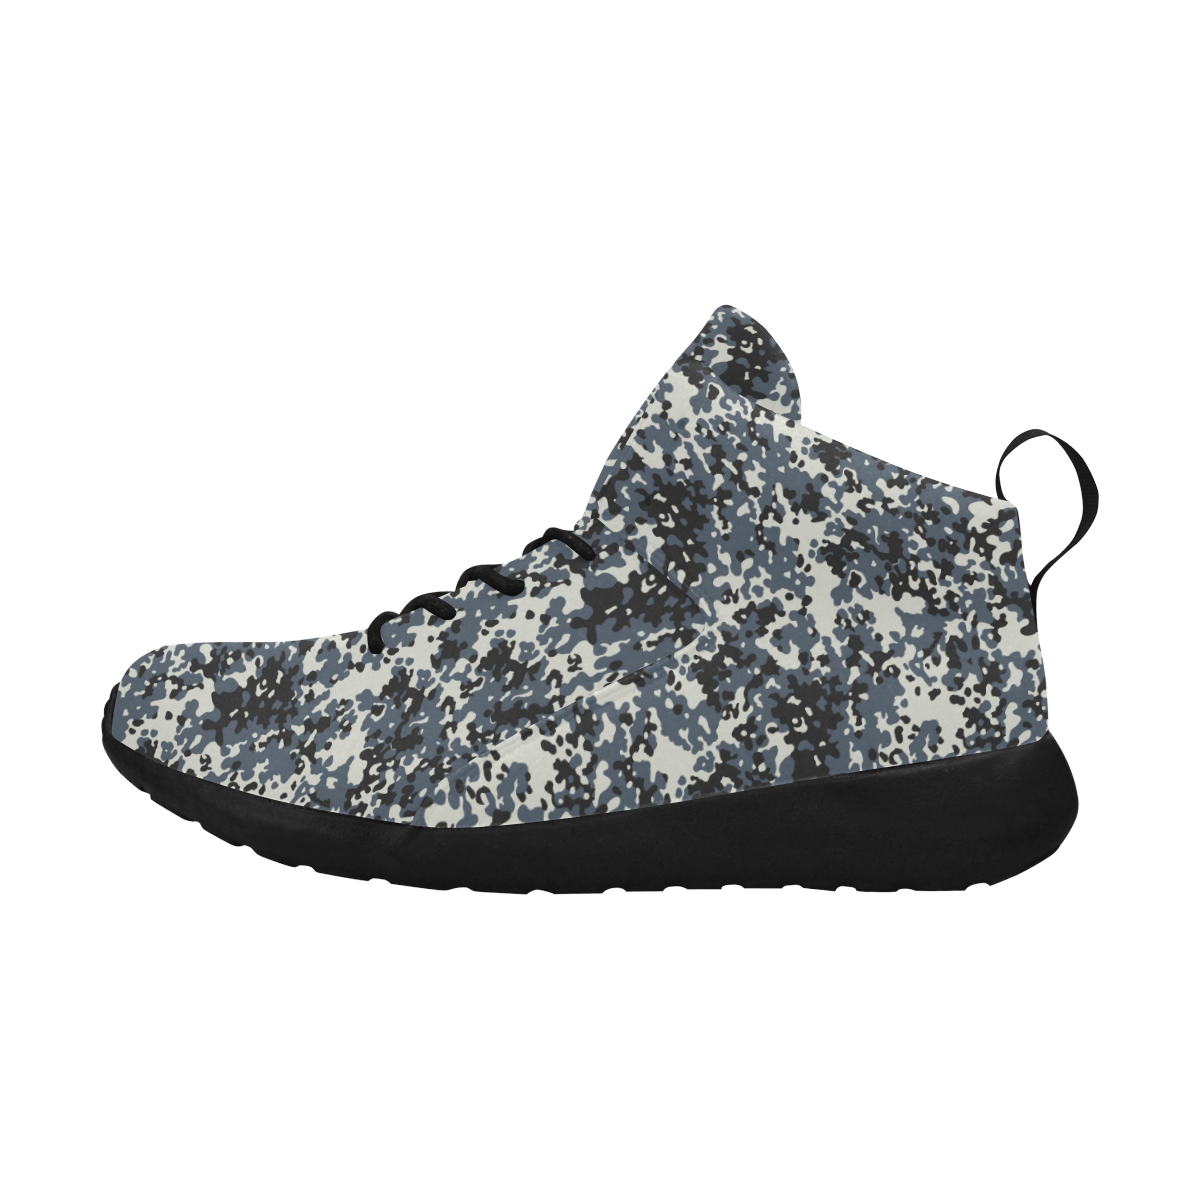 Urban City Black/Gray Digital Camouflage Women's Chukka Training Shoes (Model 57502)